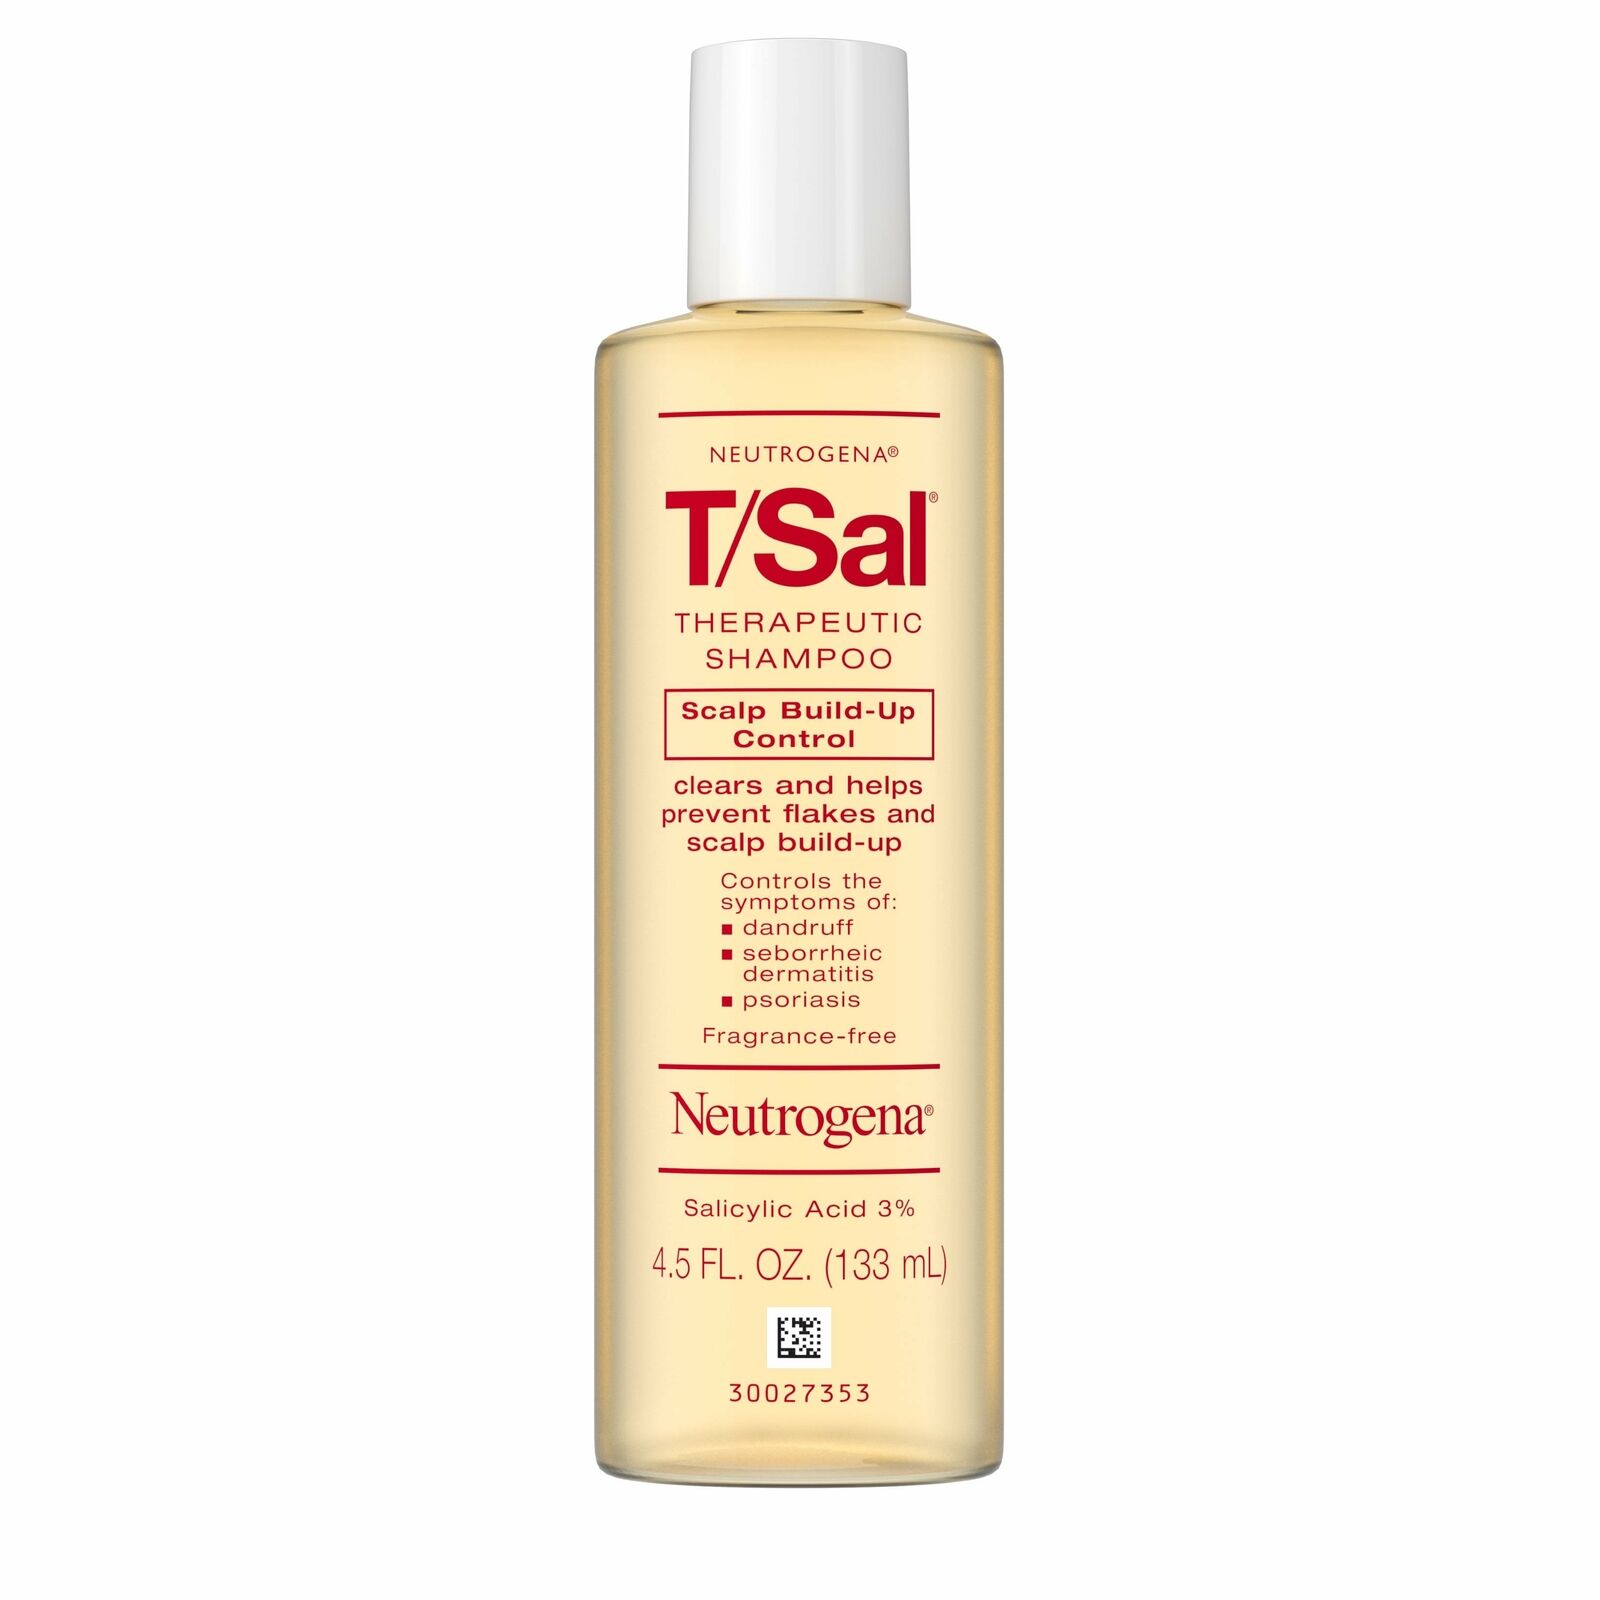 Neutrogena T/Sal Therapeutic Shampoo, 3% Salicylic Acid, 4.5 fl. oz - image 3 of 3